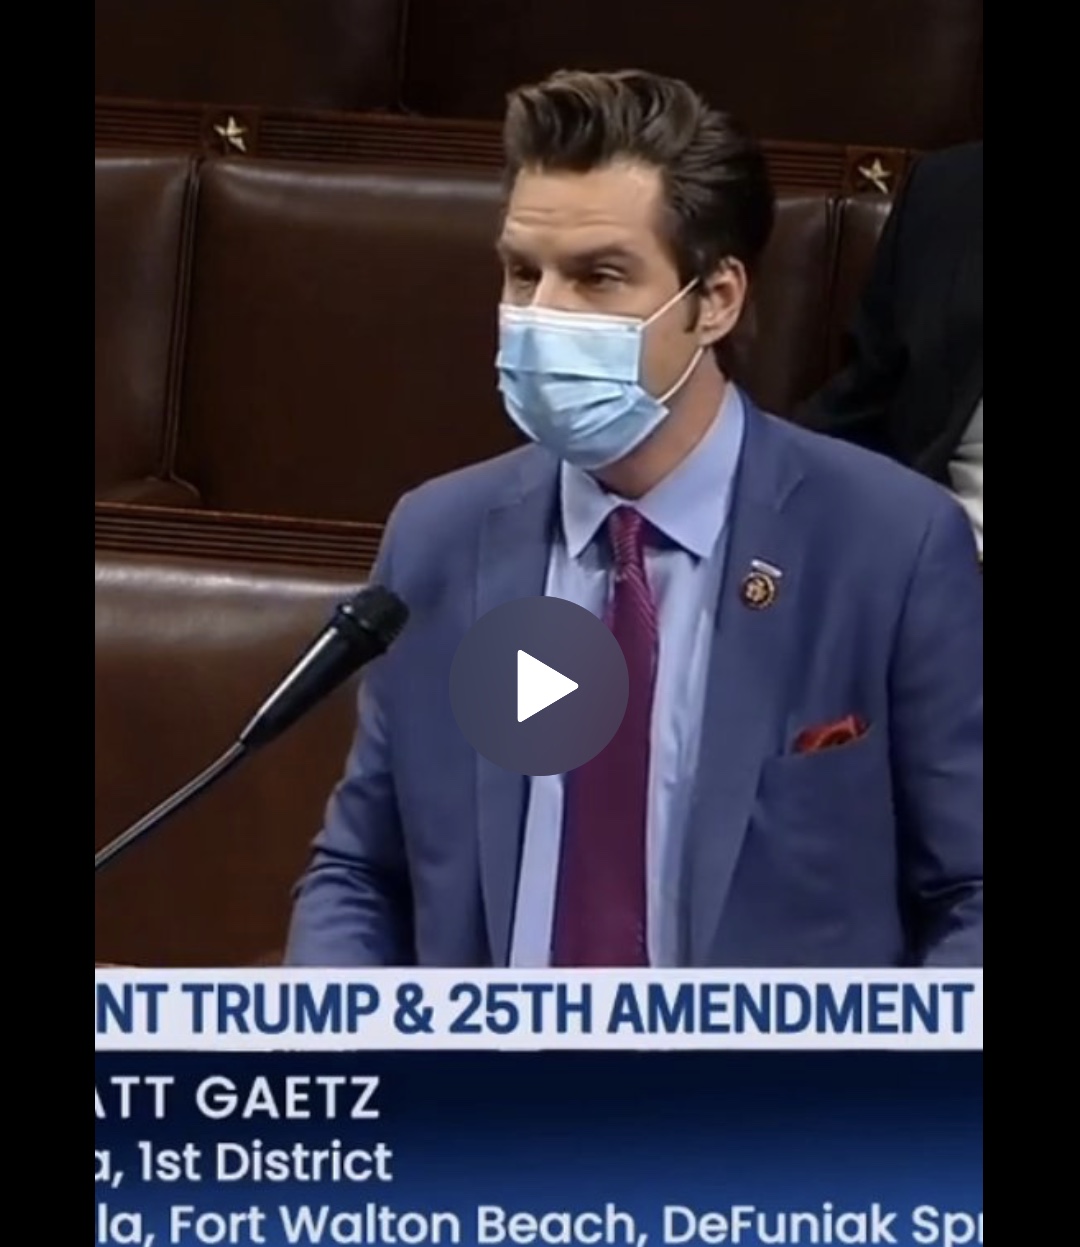 Please Listen To Representative Matt Gaitz Speak to Congress for the American People